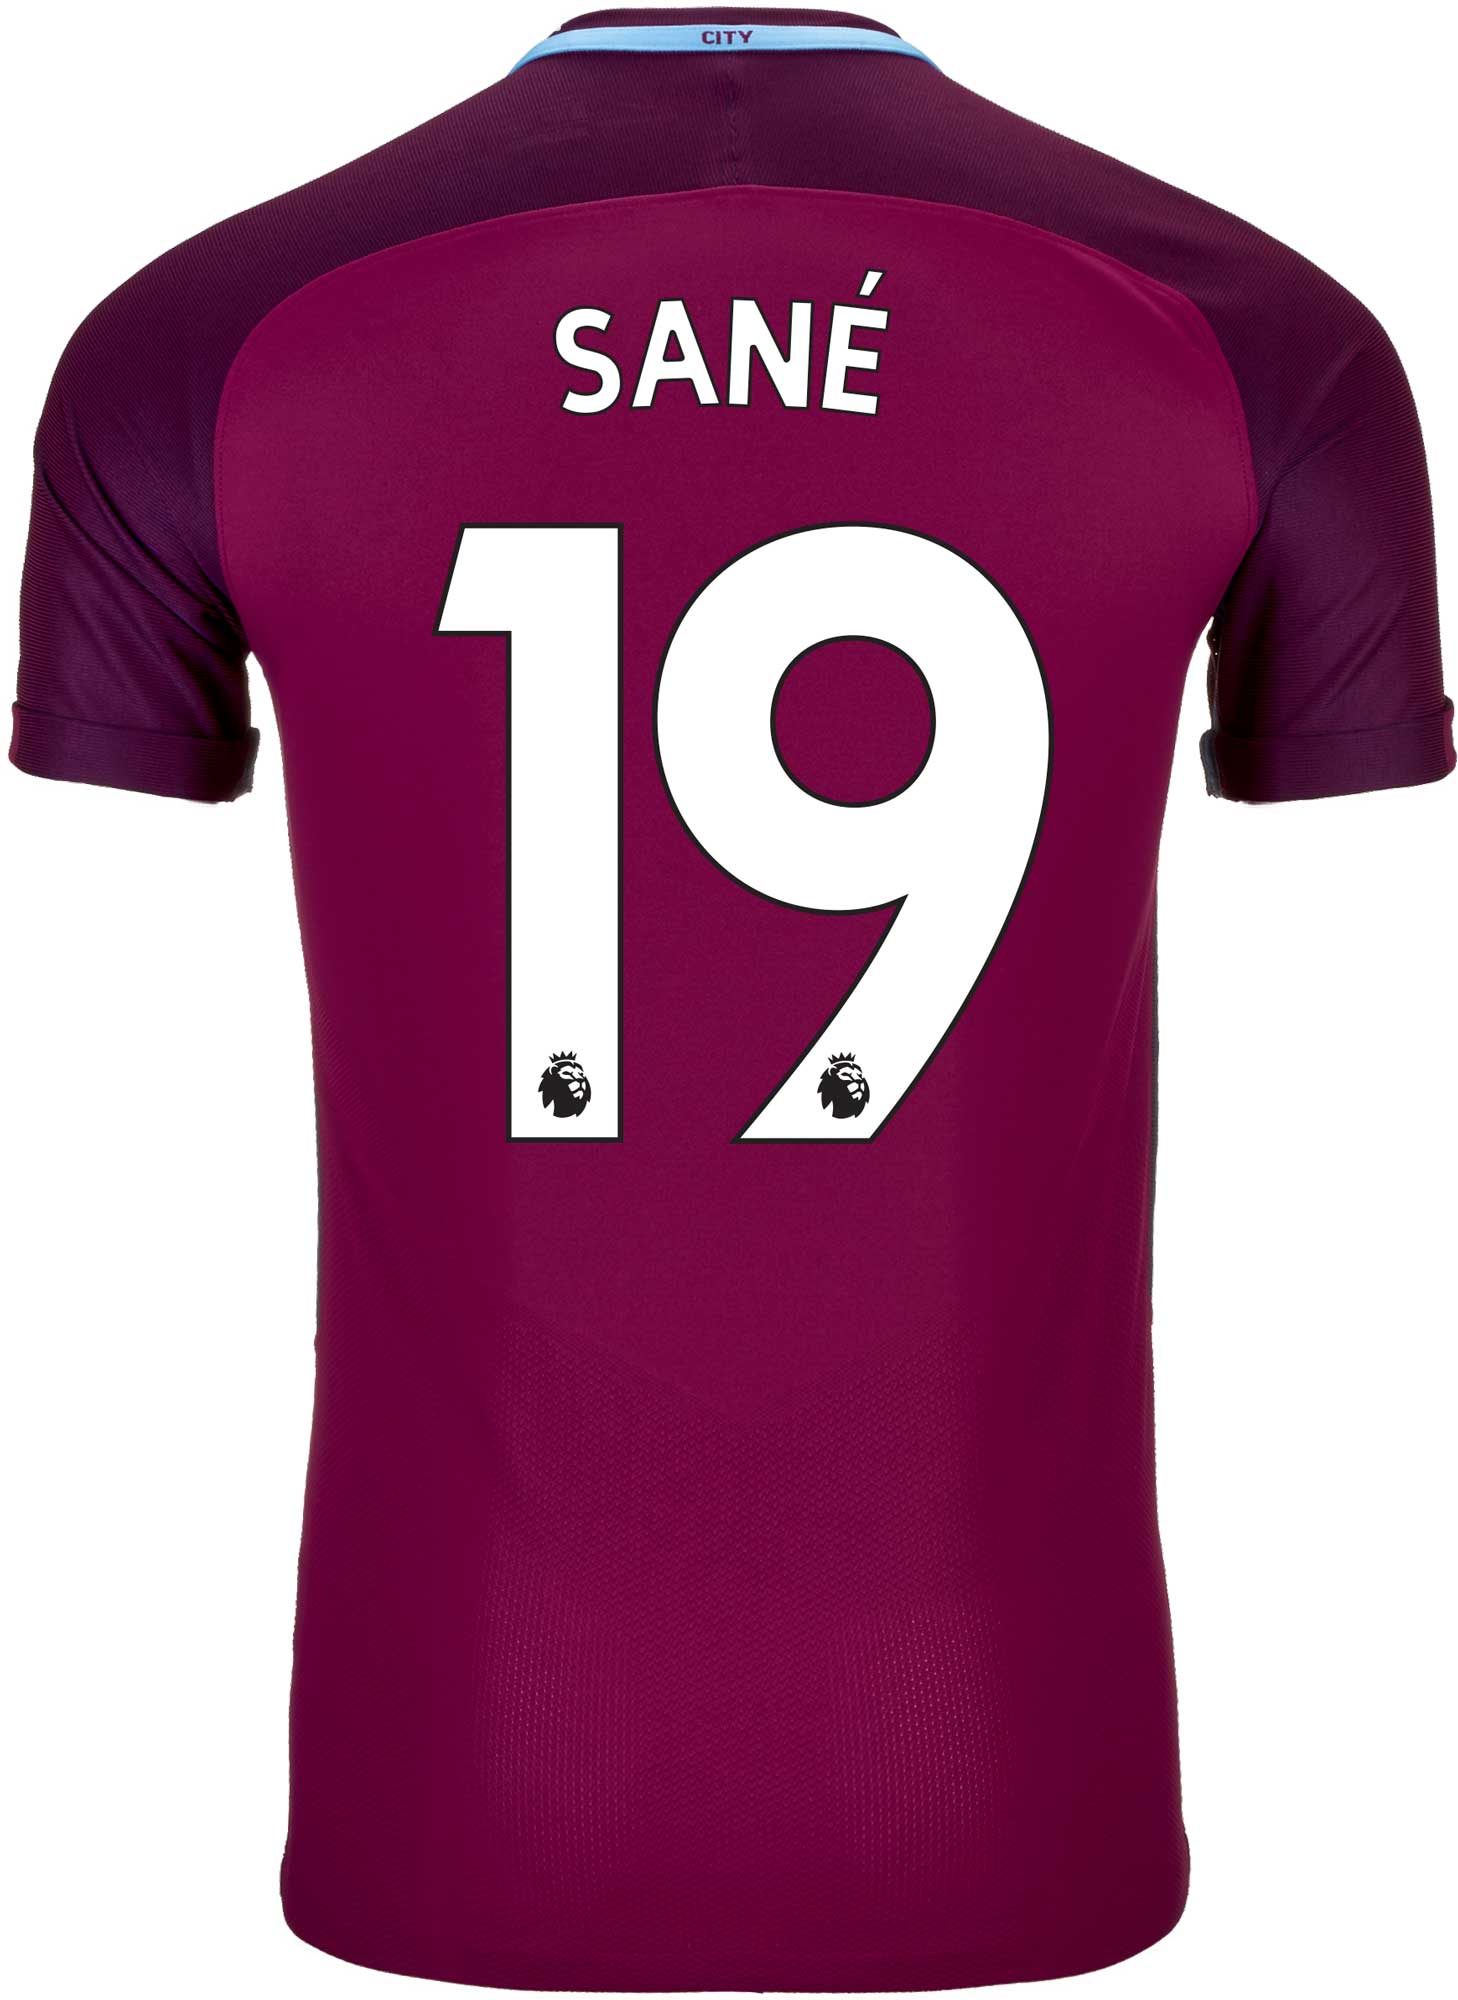 Nike Leroy Sane Manchester City Away Match Jersey 2017-18 ...